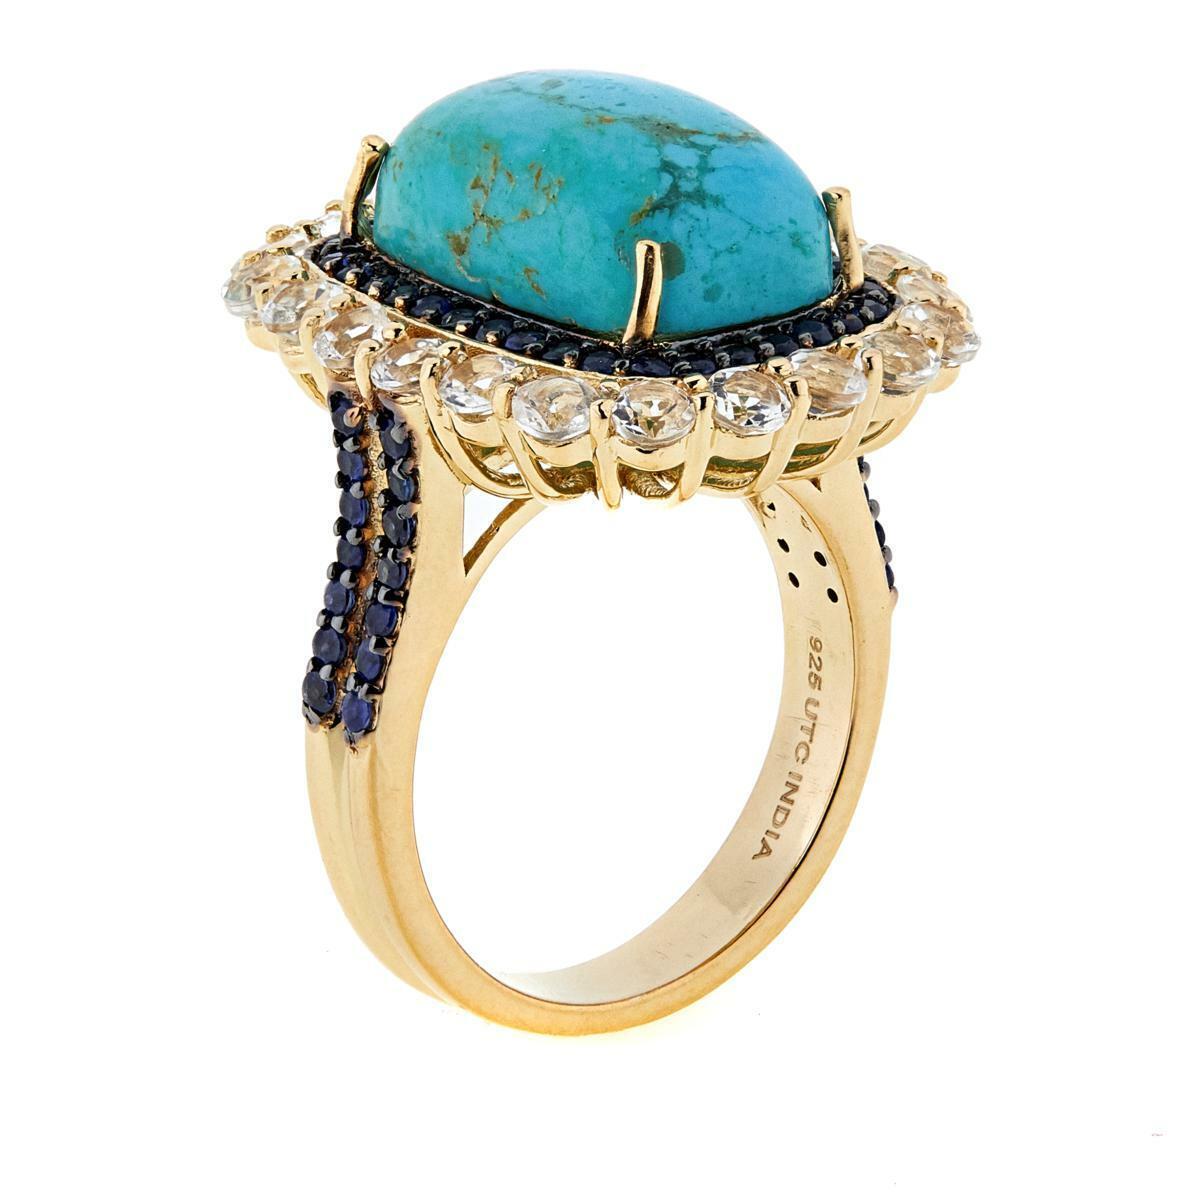 Paul Deasy Gem Kingman Turquoise, Sapphire And White Topaz Ring Size 5 Hsn $260